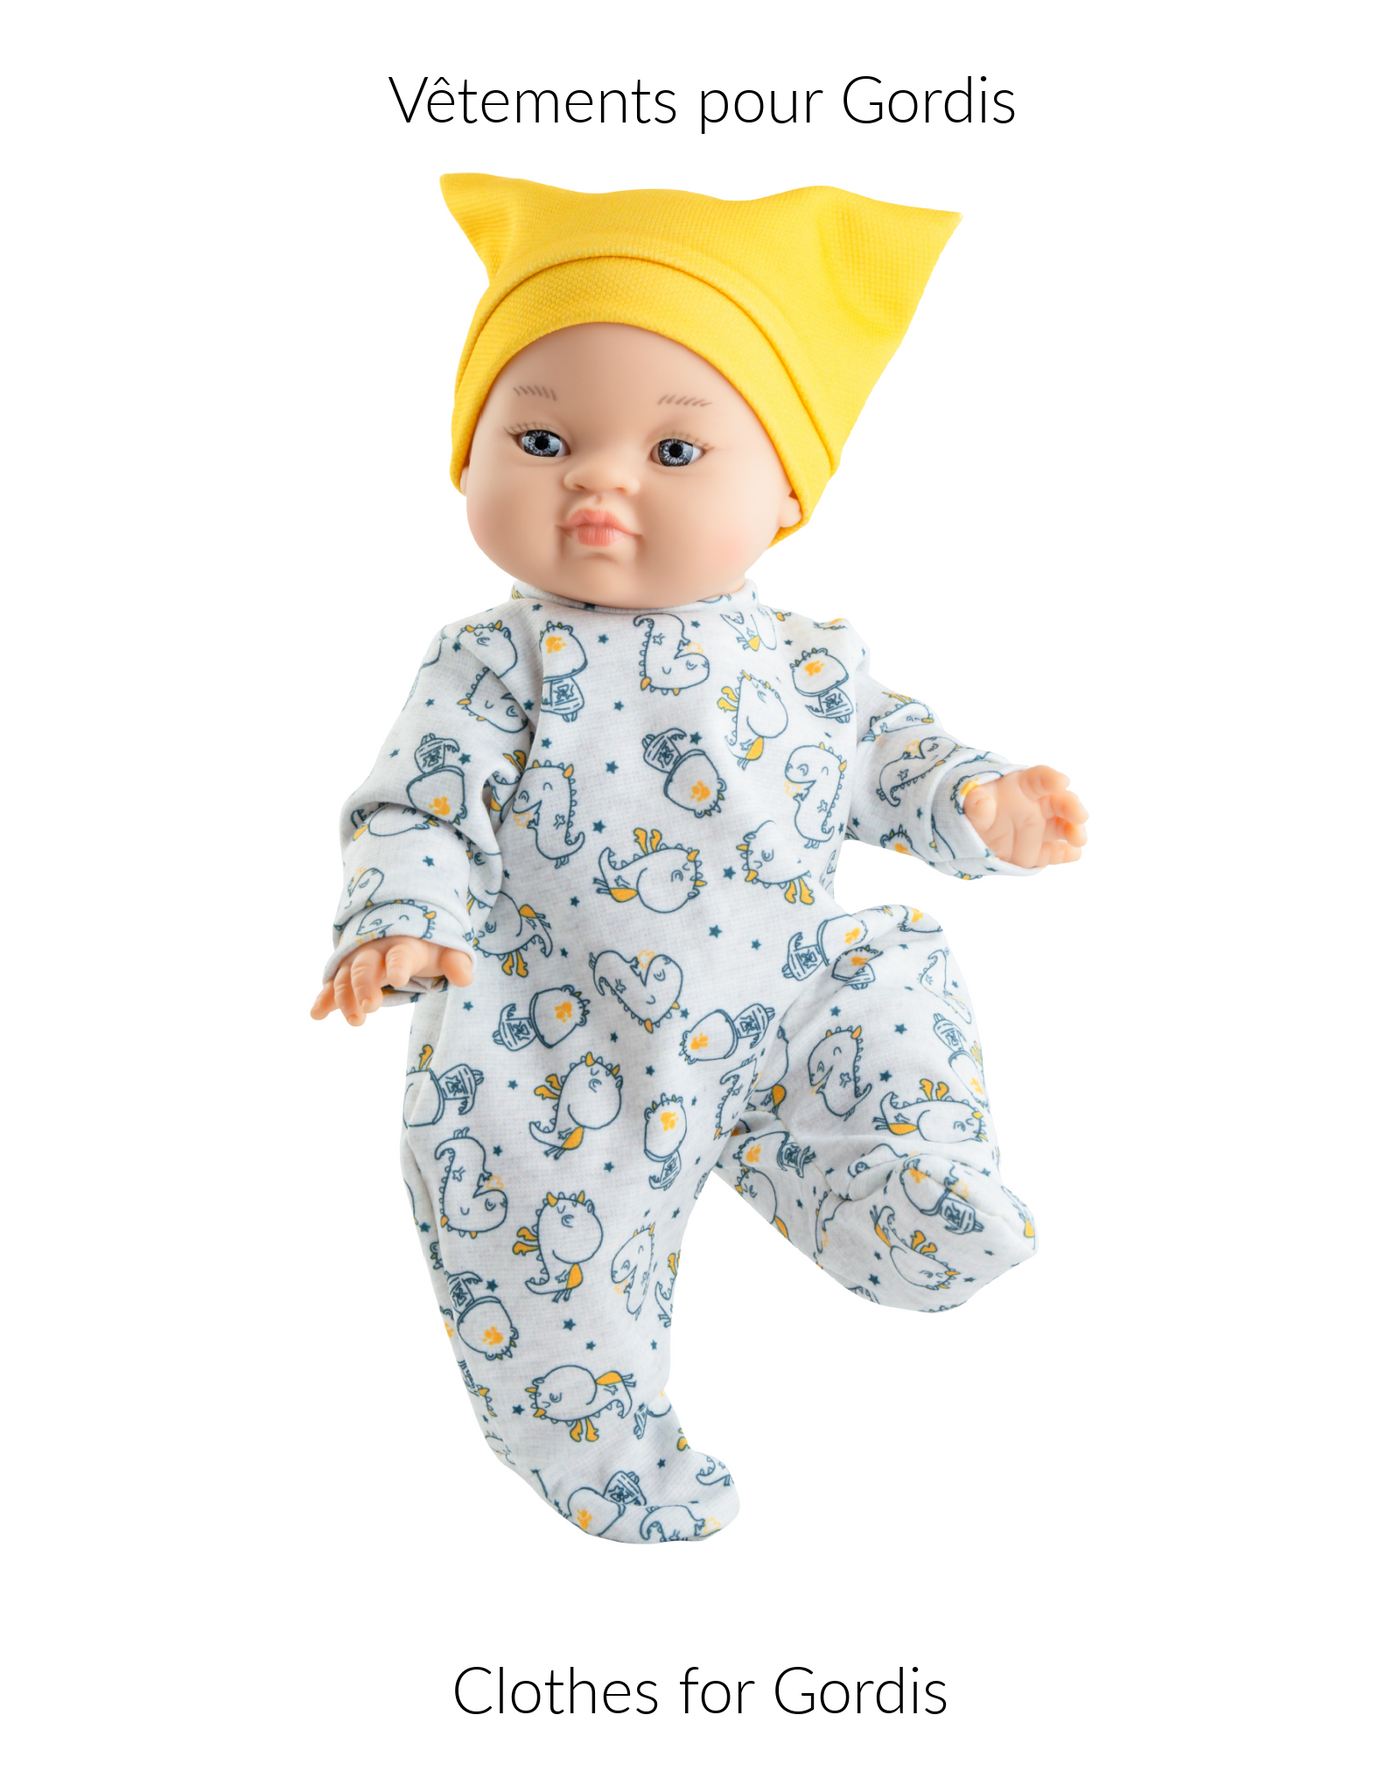 Gordis doll clothes - Dinosaur pajamas and yellow hat - Paola Reina